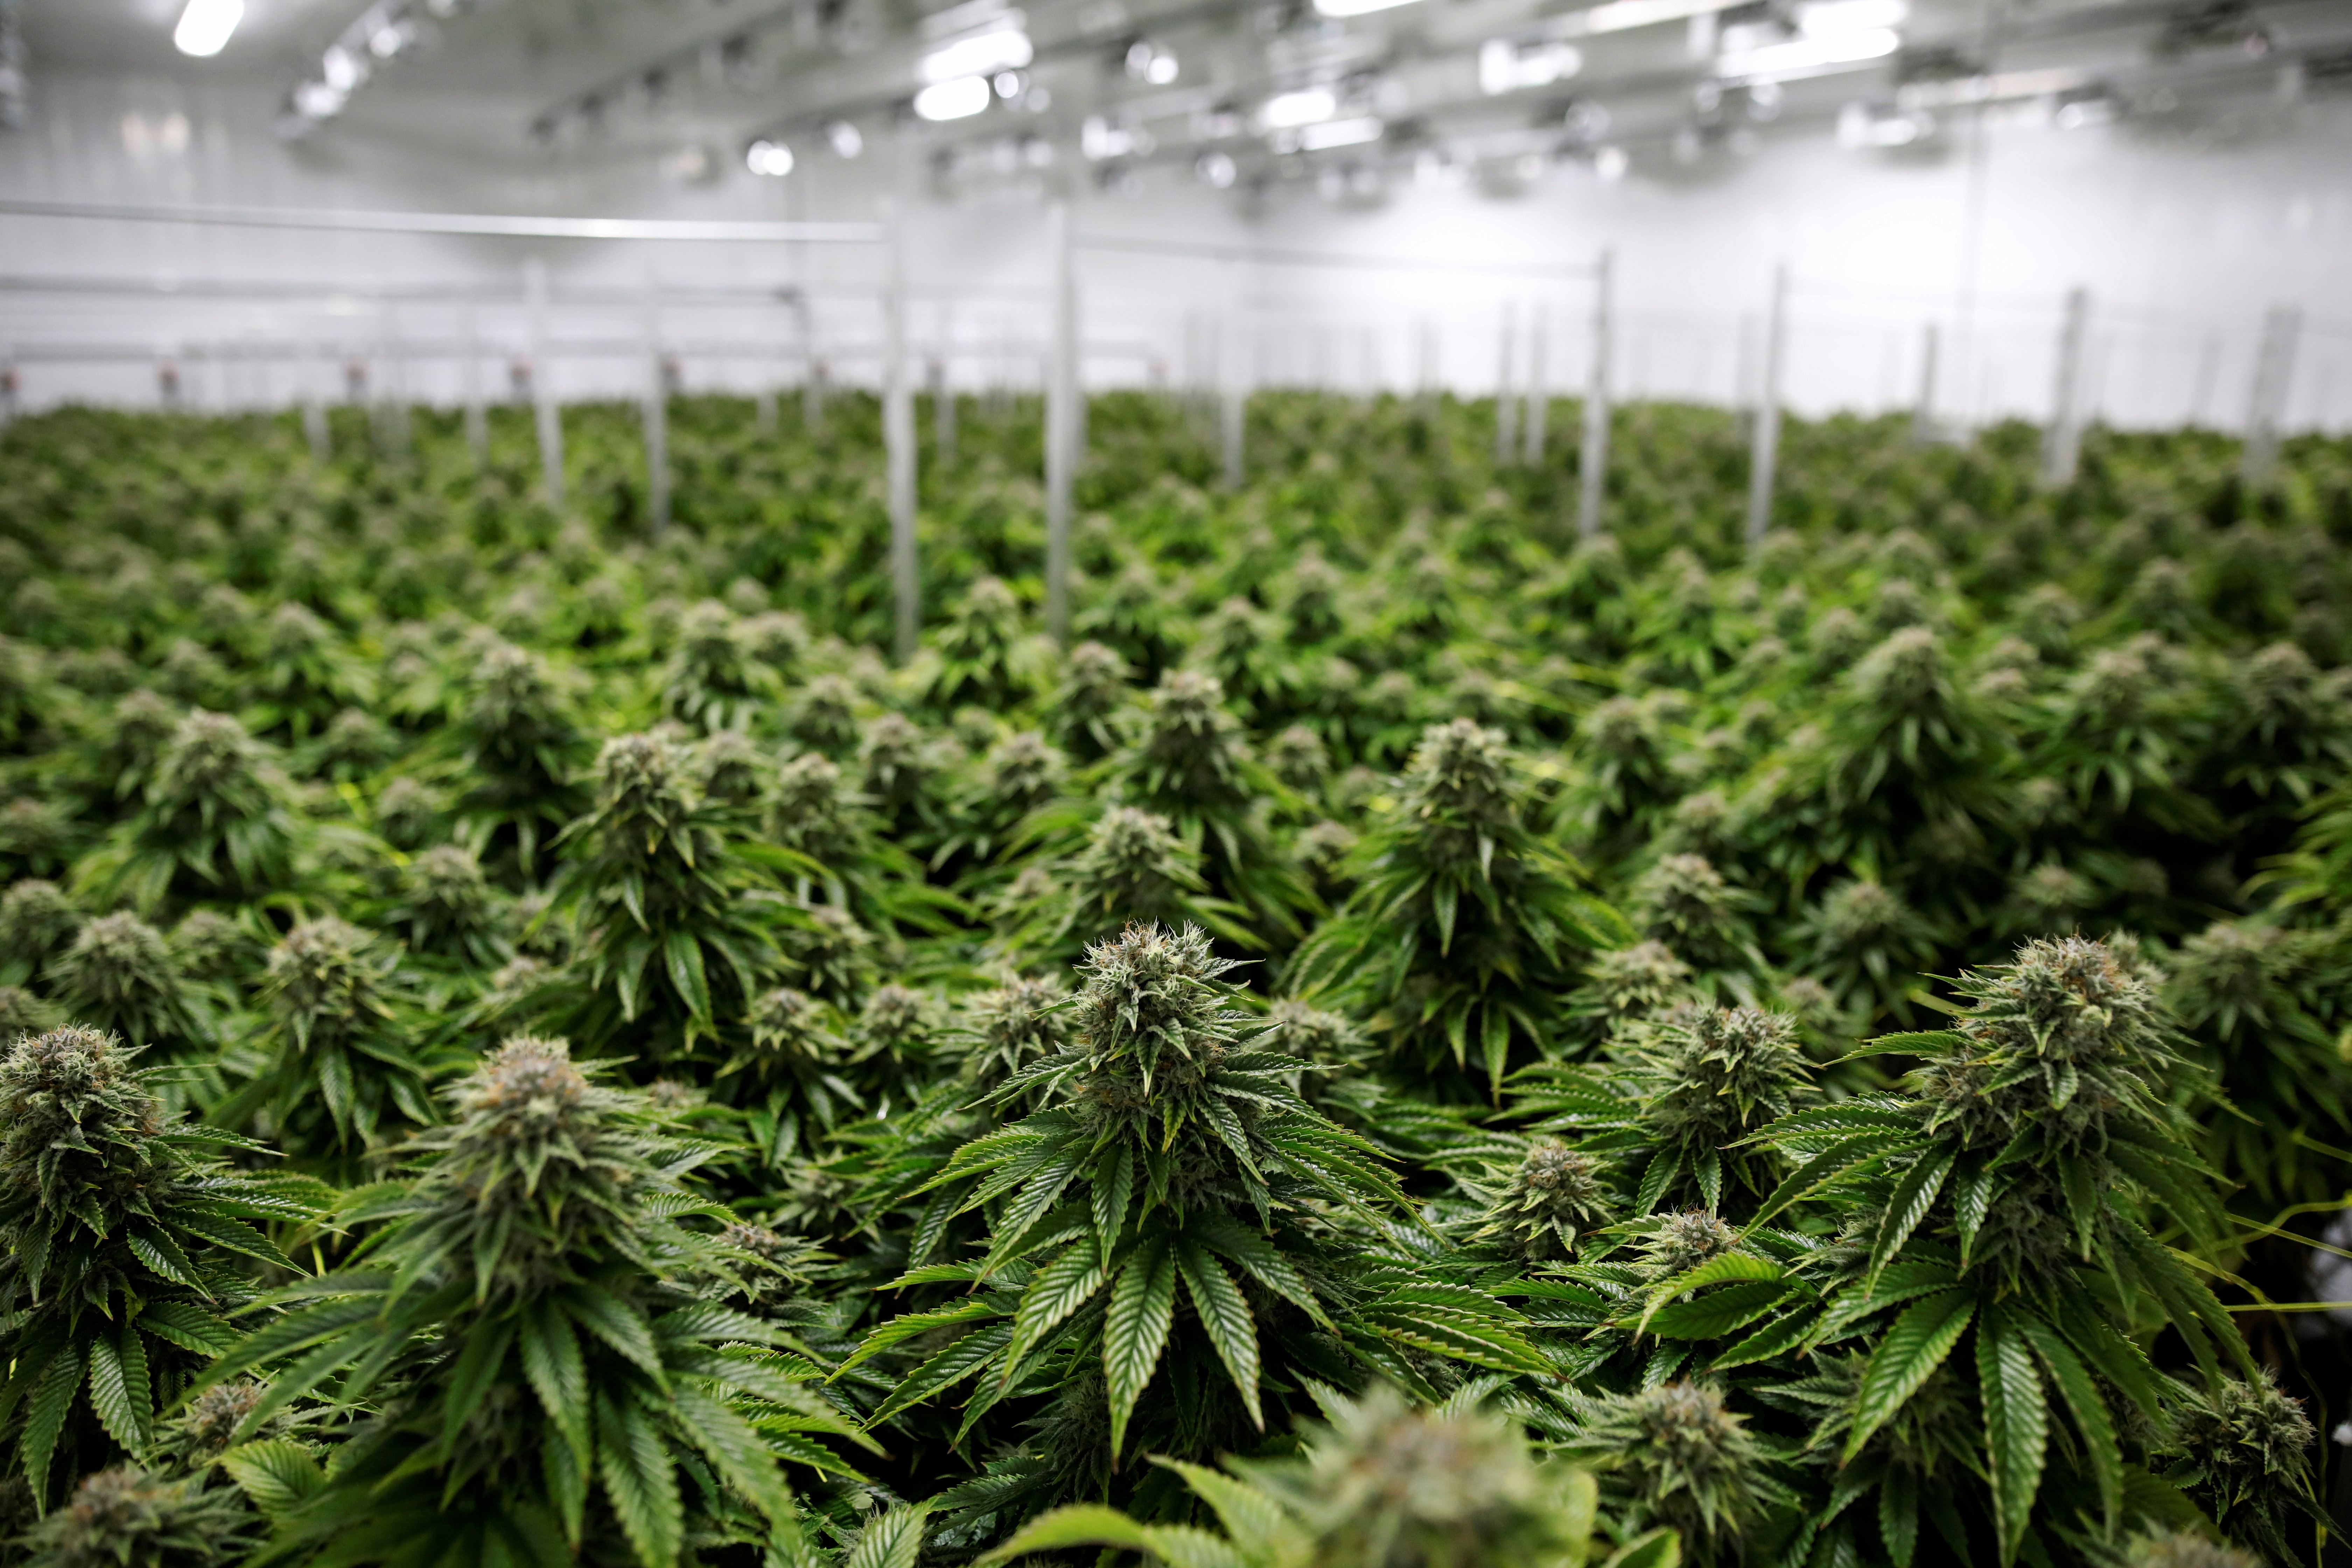 Chemdawg marijuana plants grow at a facility